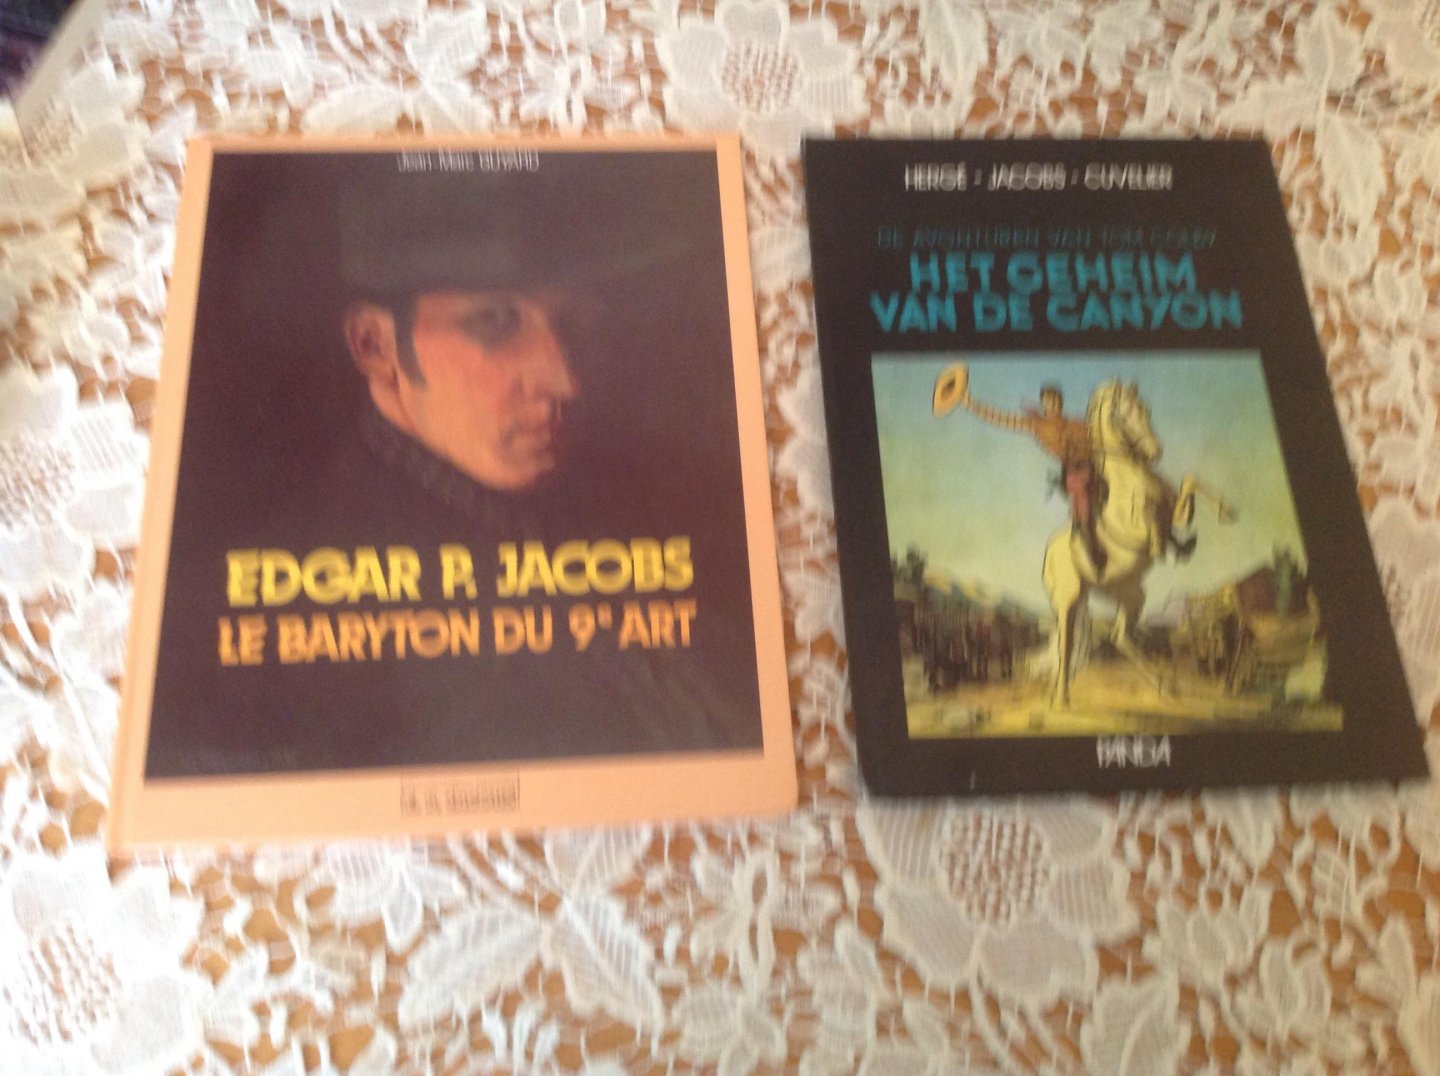 Jean-Marc Guyard - Edgar P Jacobs Le Barton Du 9e Art met extra gerelateerde titel